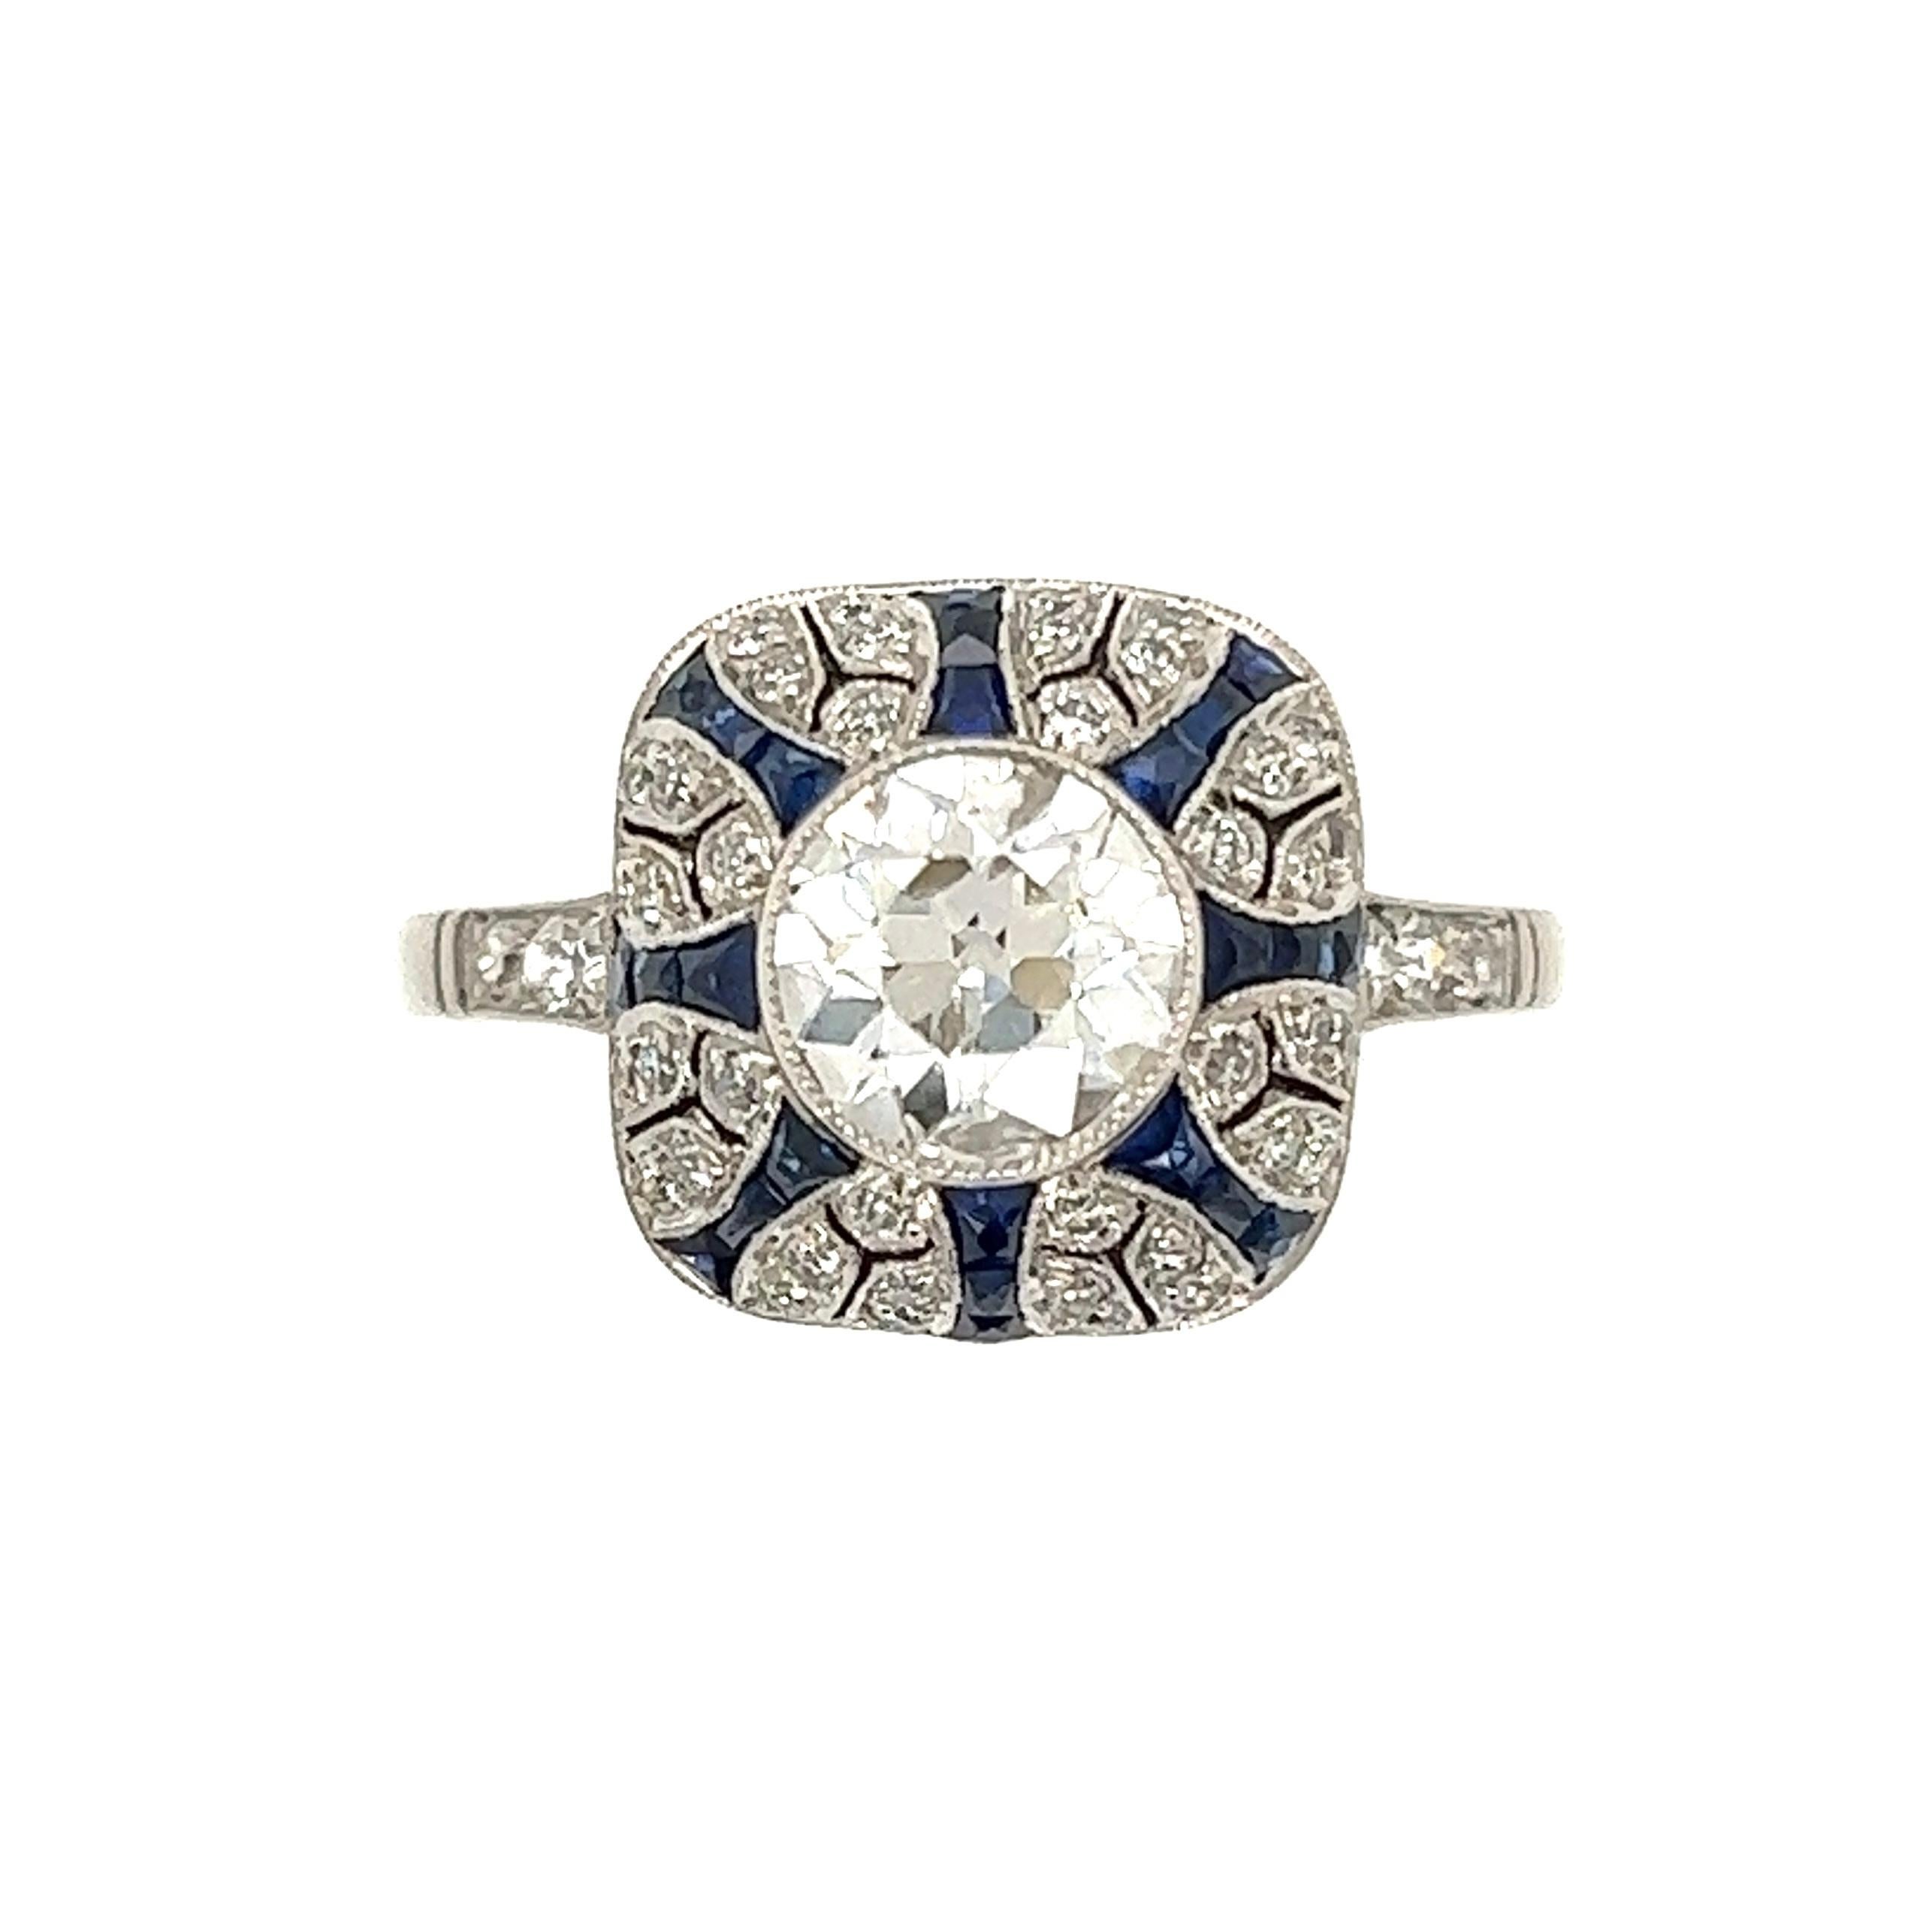 Diamond and Sapphire Art Deco Revival Platinum Ring Fine Estate Jewelry 1